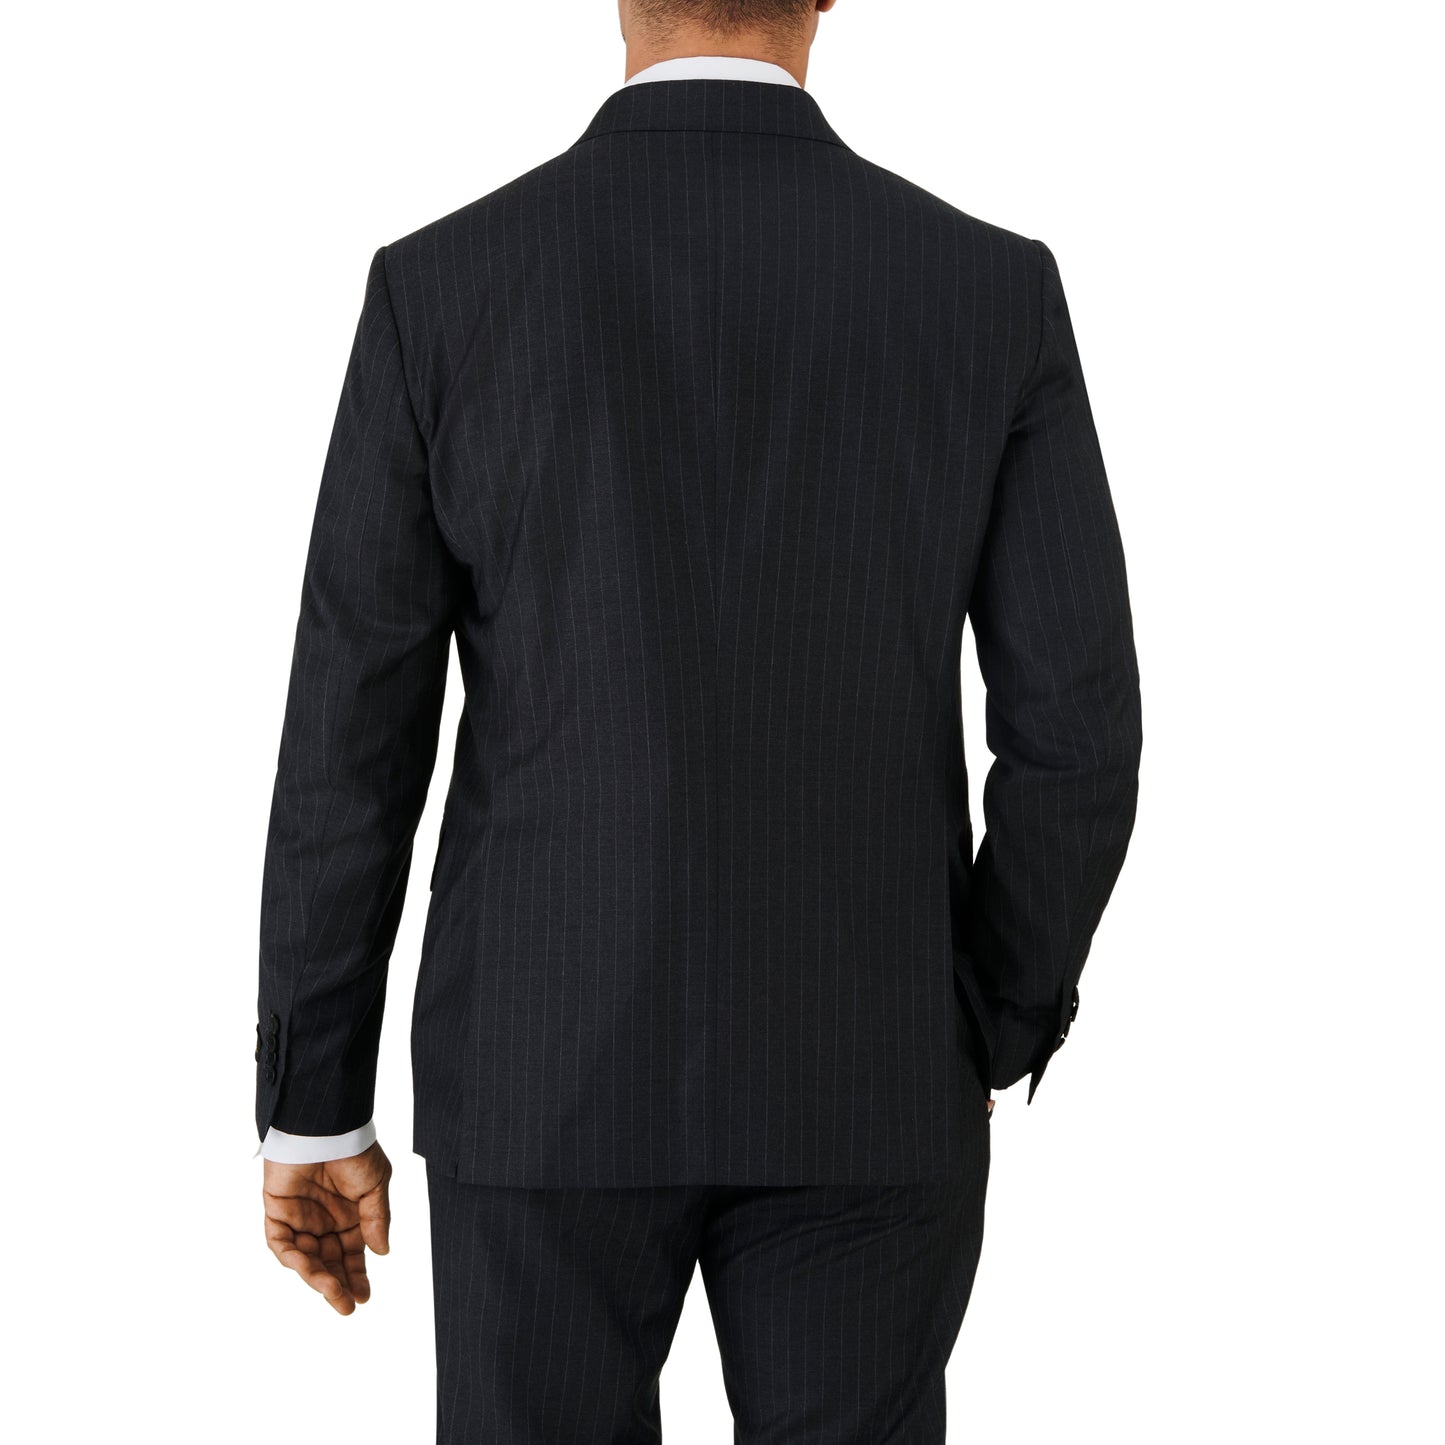 Deep Charcoal Pin Stripe Suit